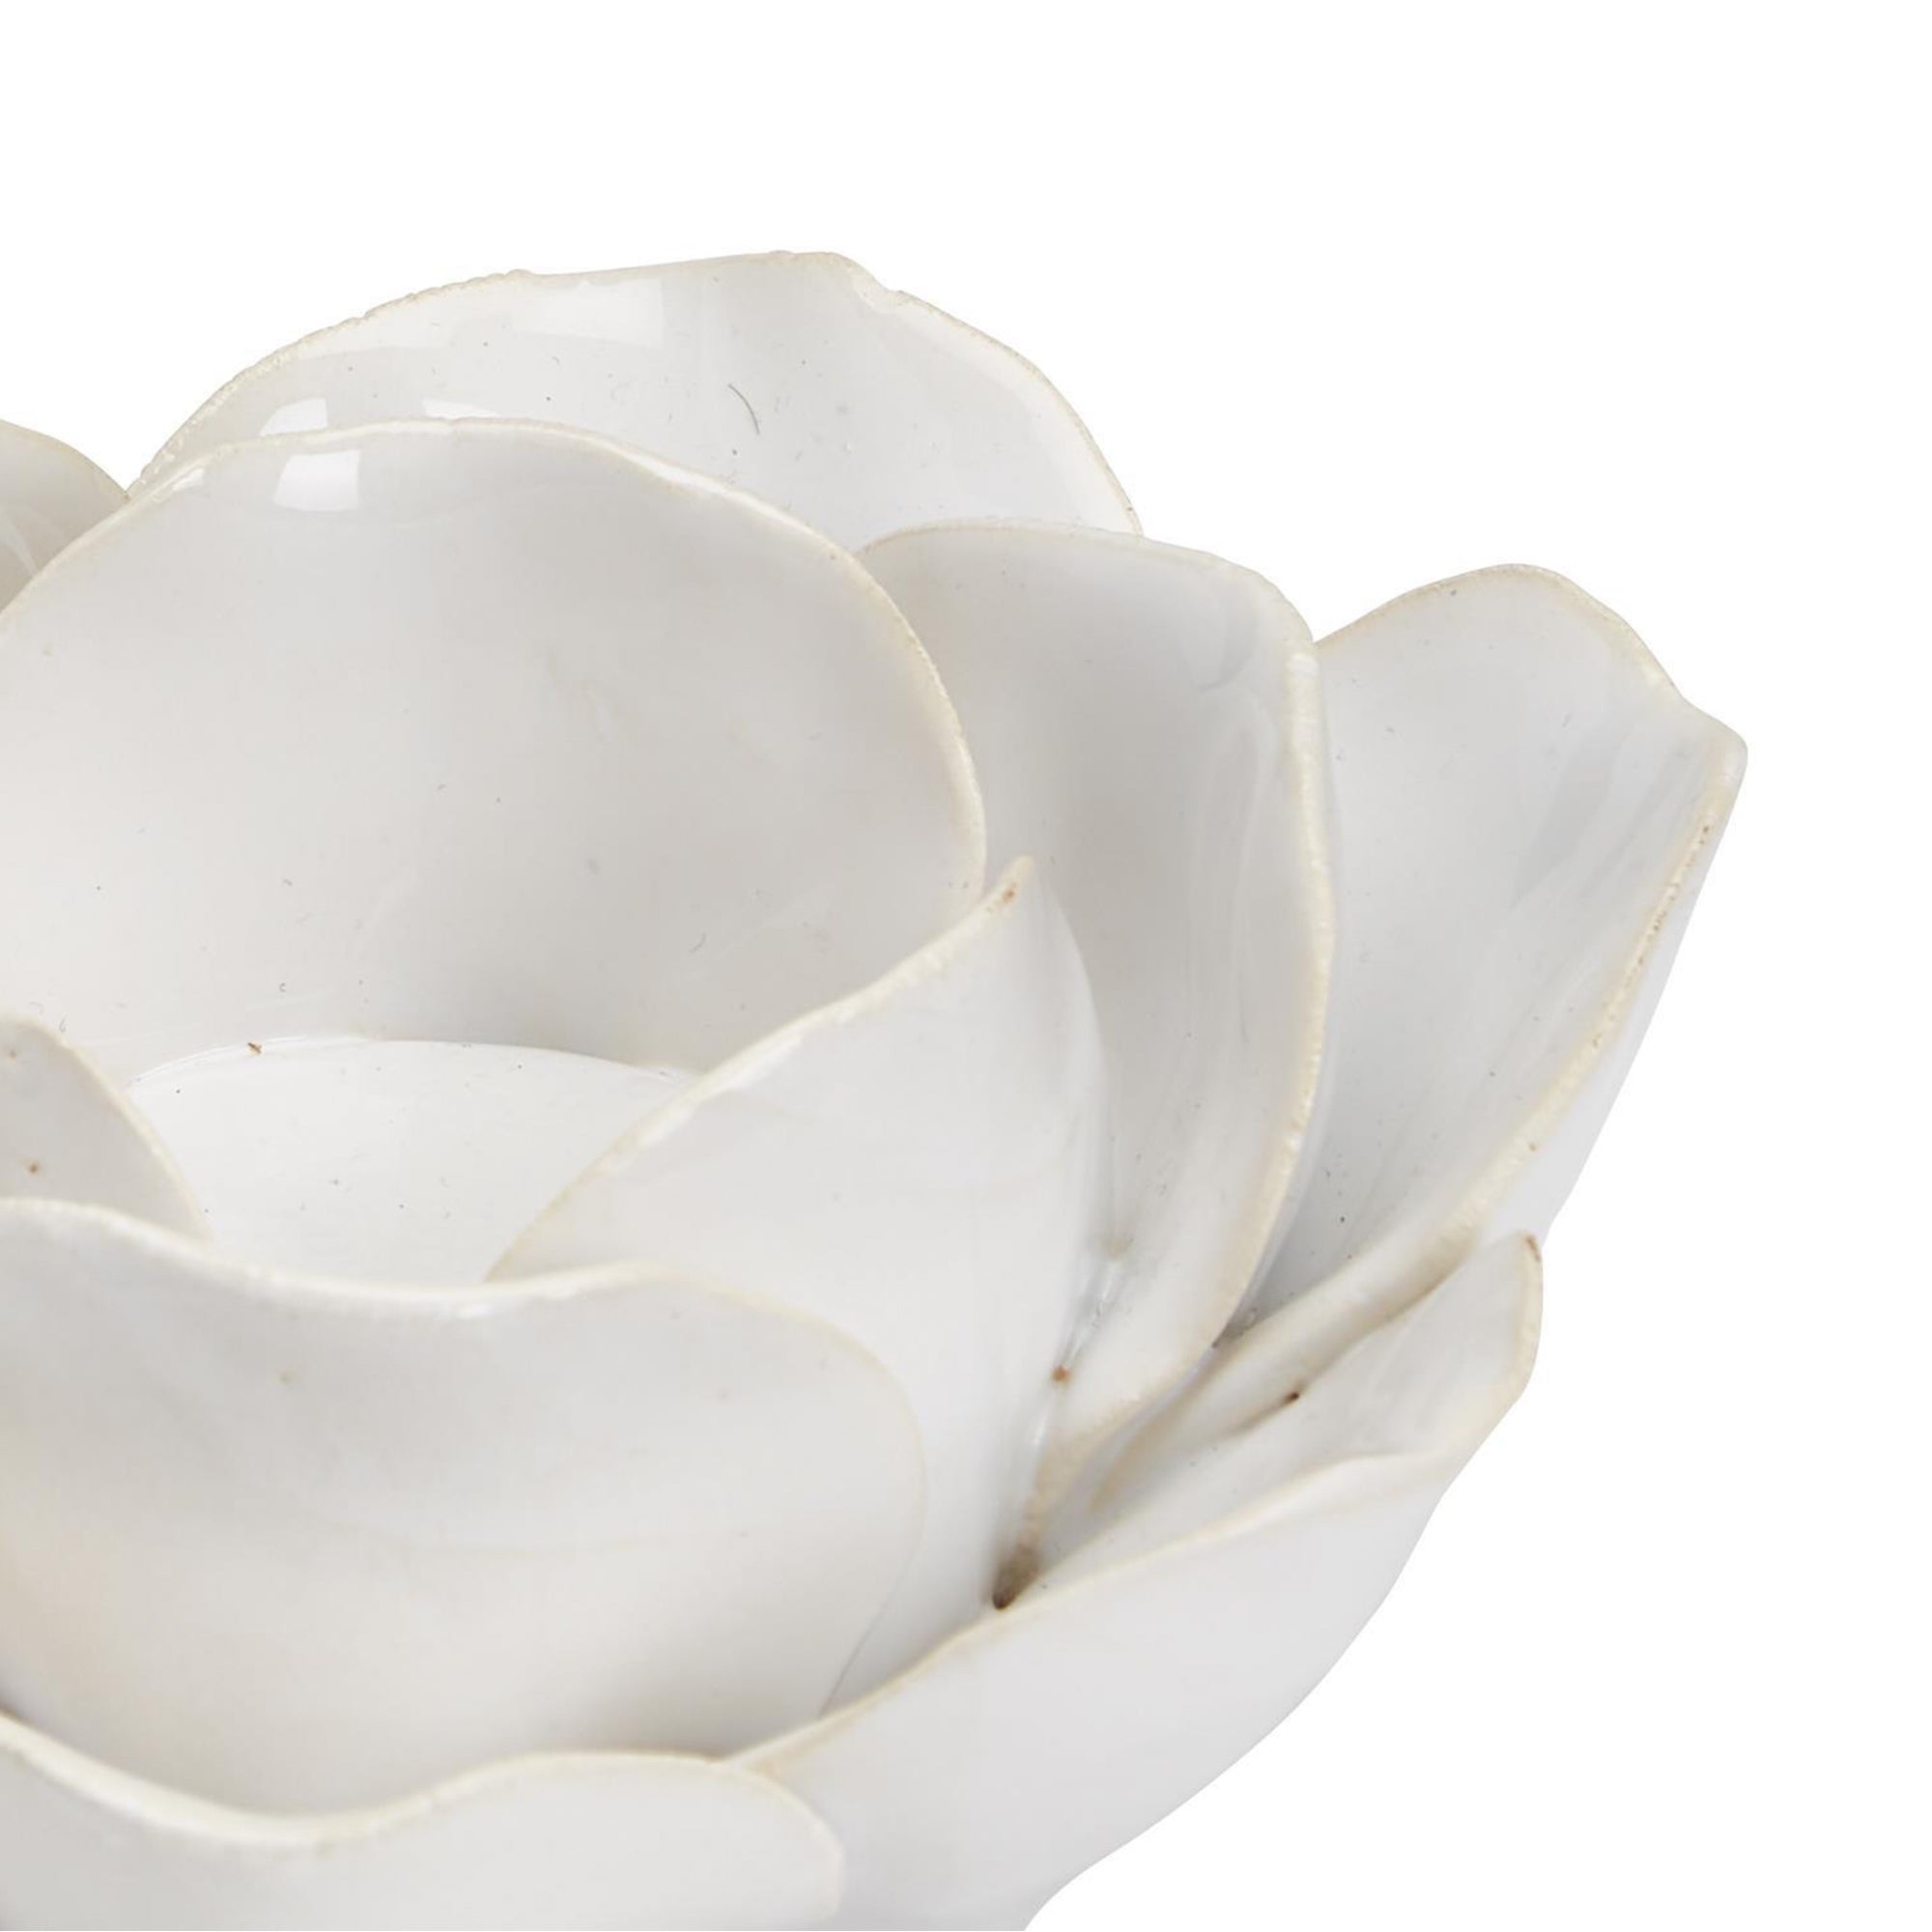 La Vie en Blanc Rose Tealight Candleholder